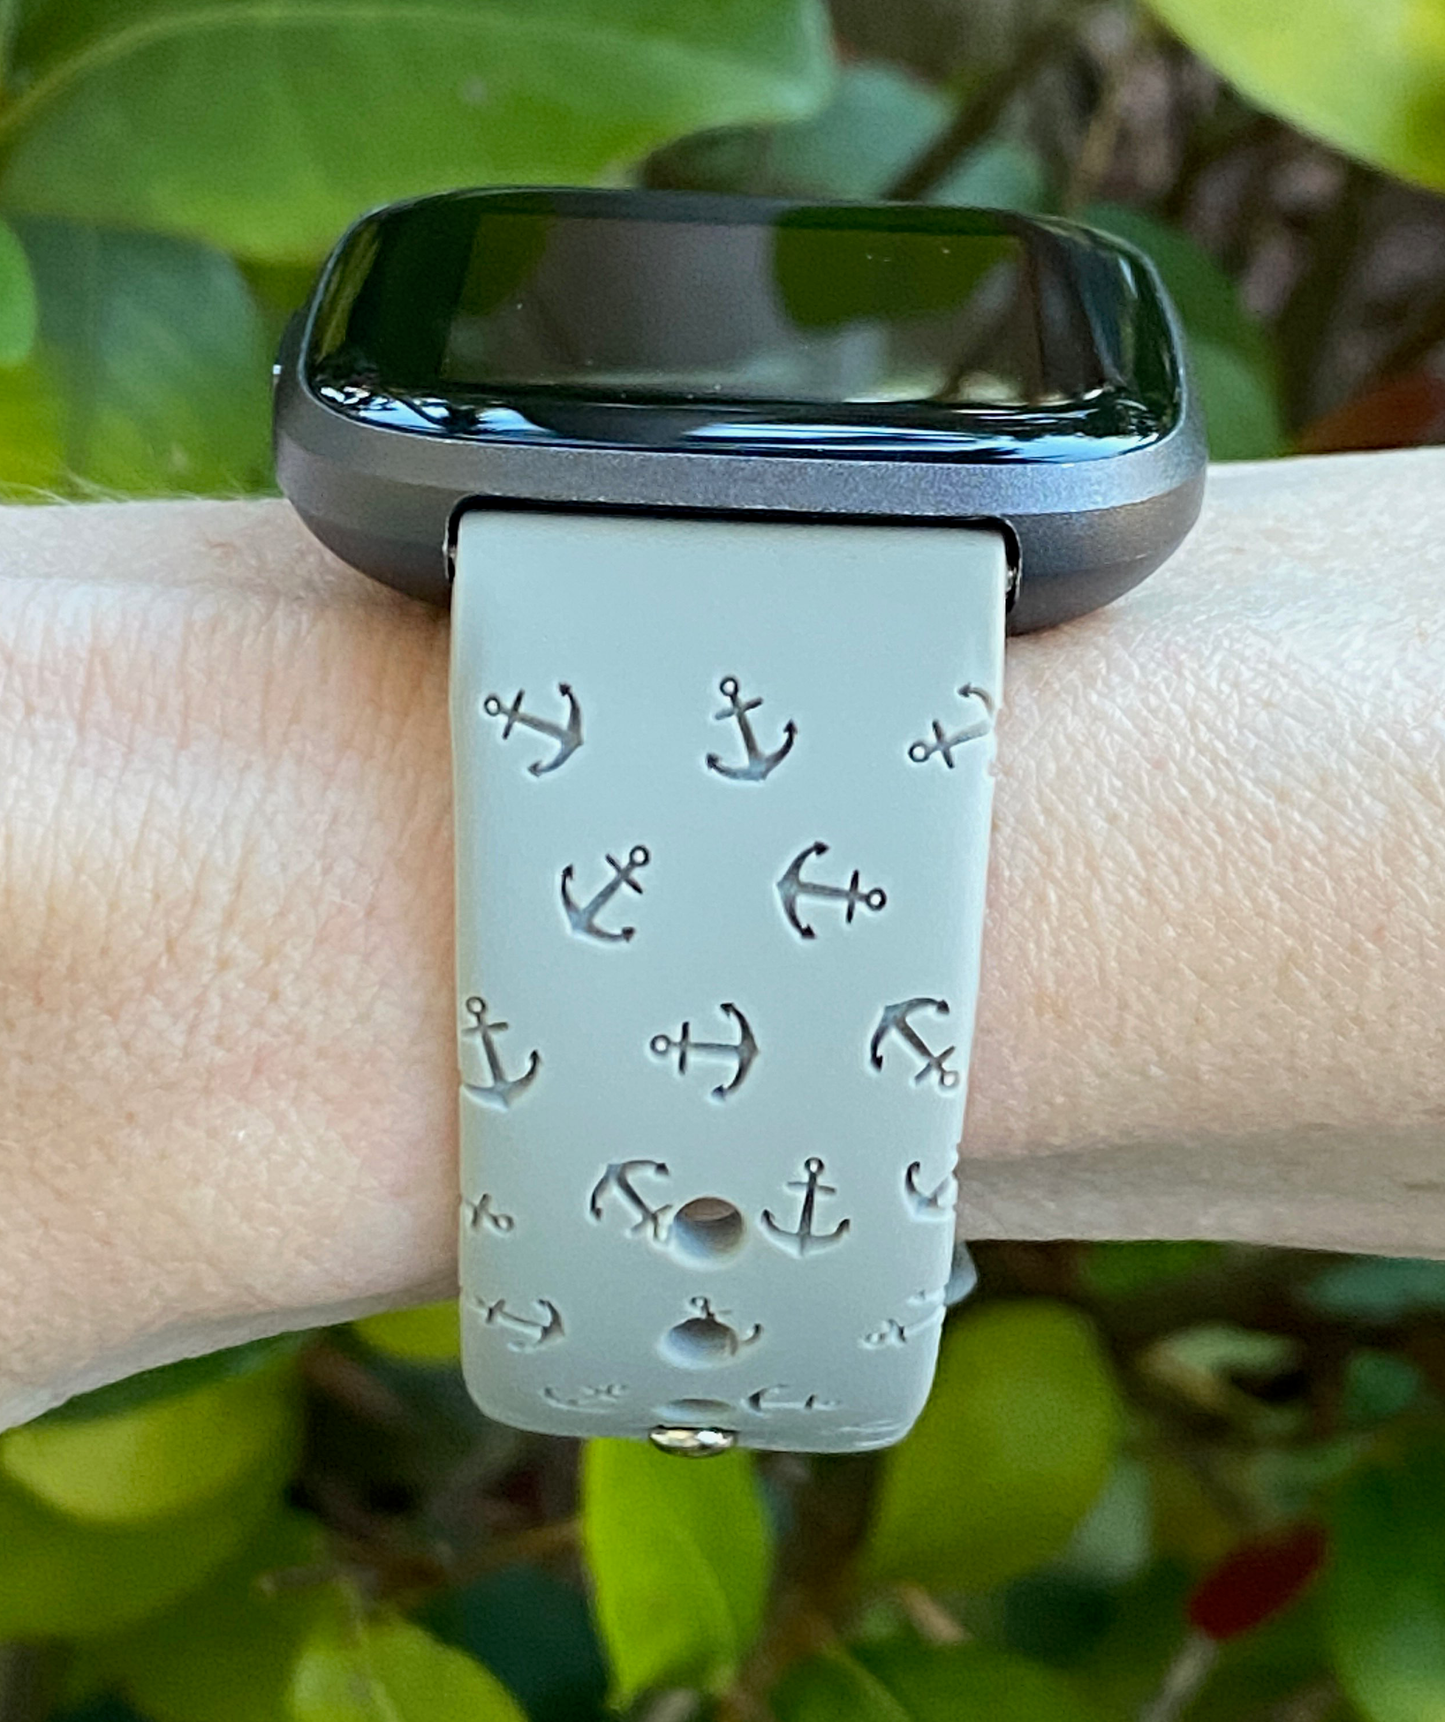 Anchors Fitbit Versa 1/2 Watch Band